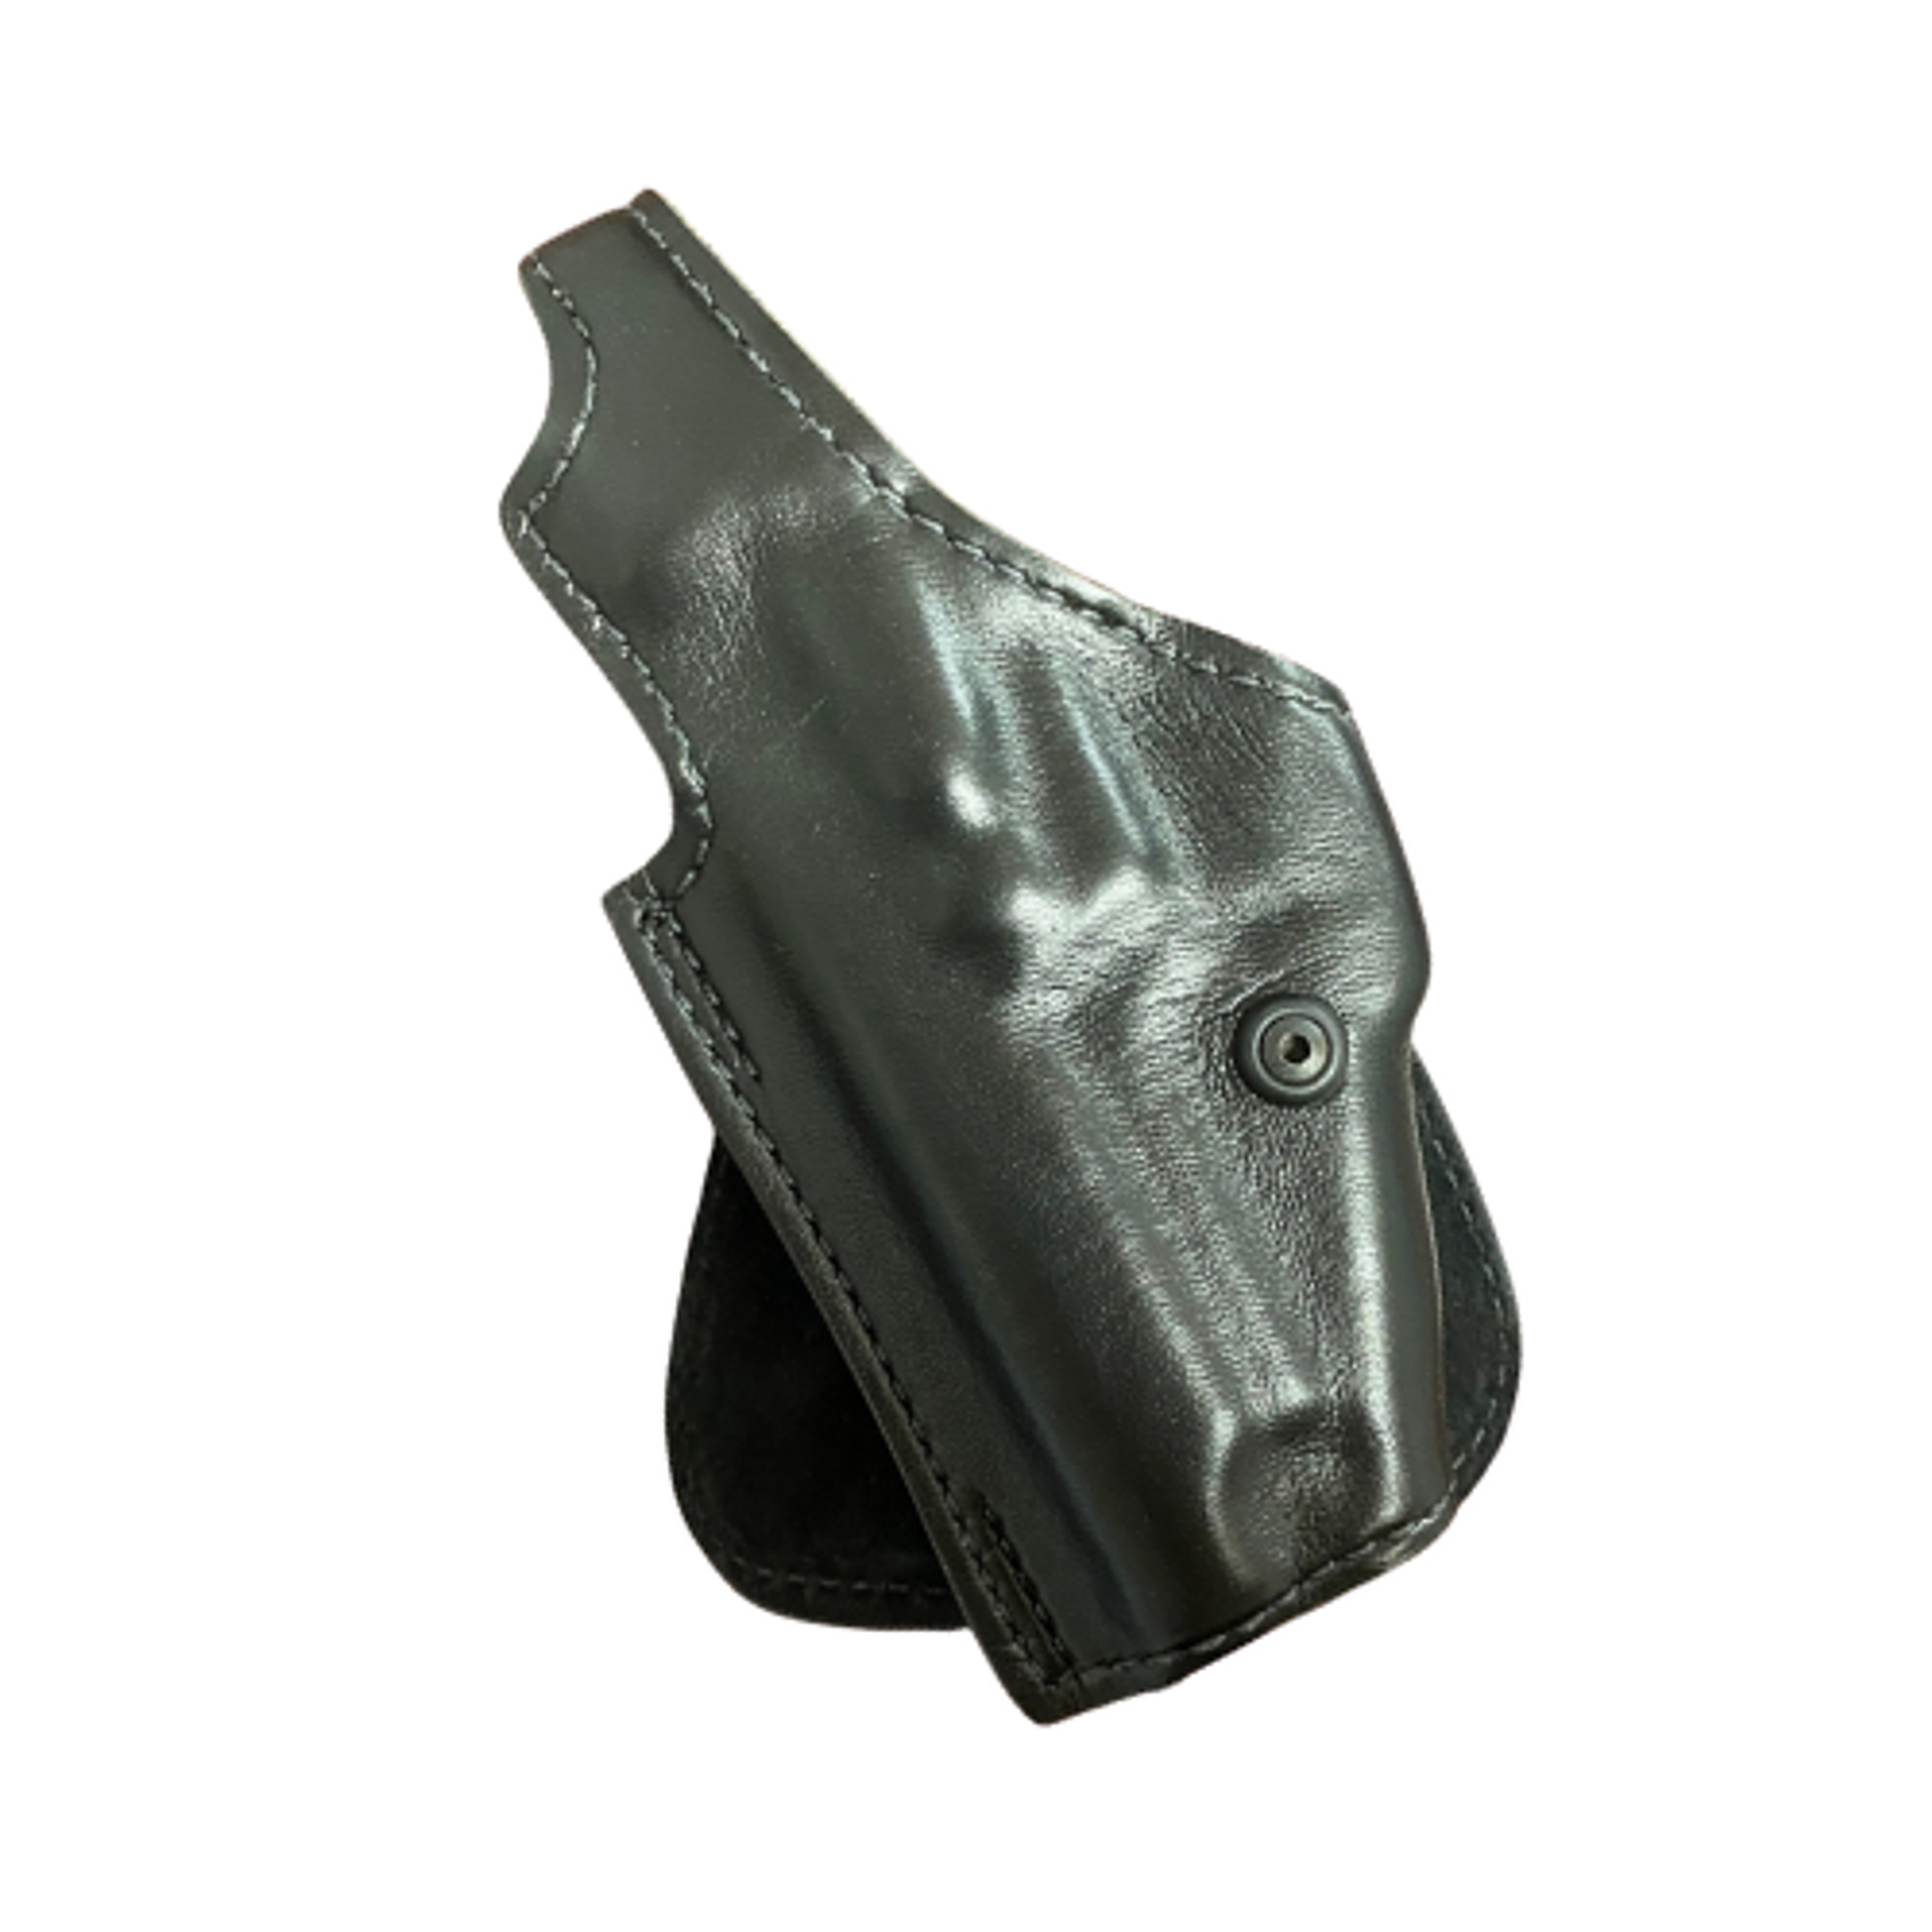 Safariland Smith & Wesson 4"BBL: 5946 Belt Loop: Paddle - Left Handed